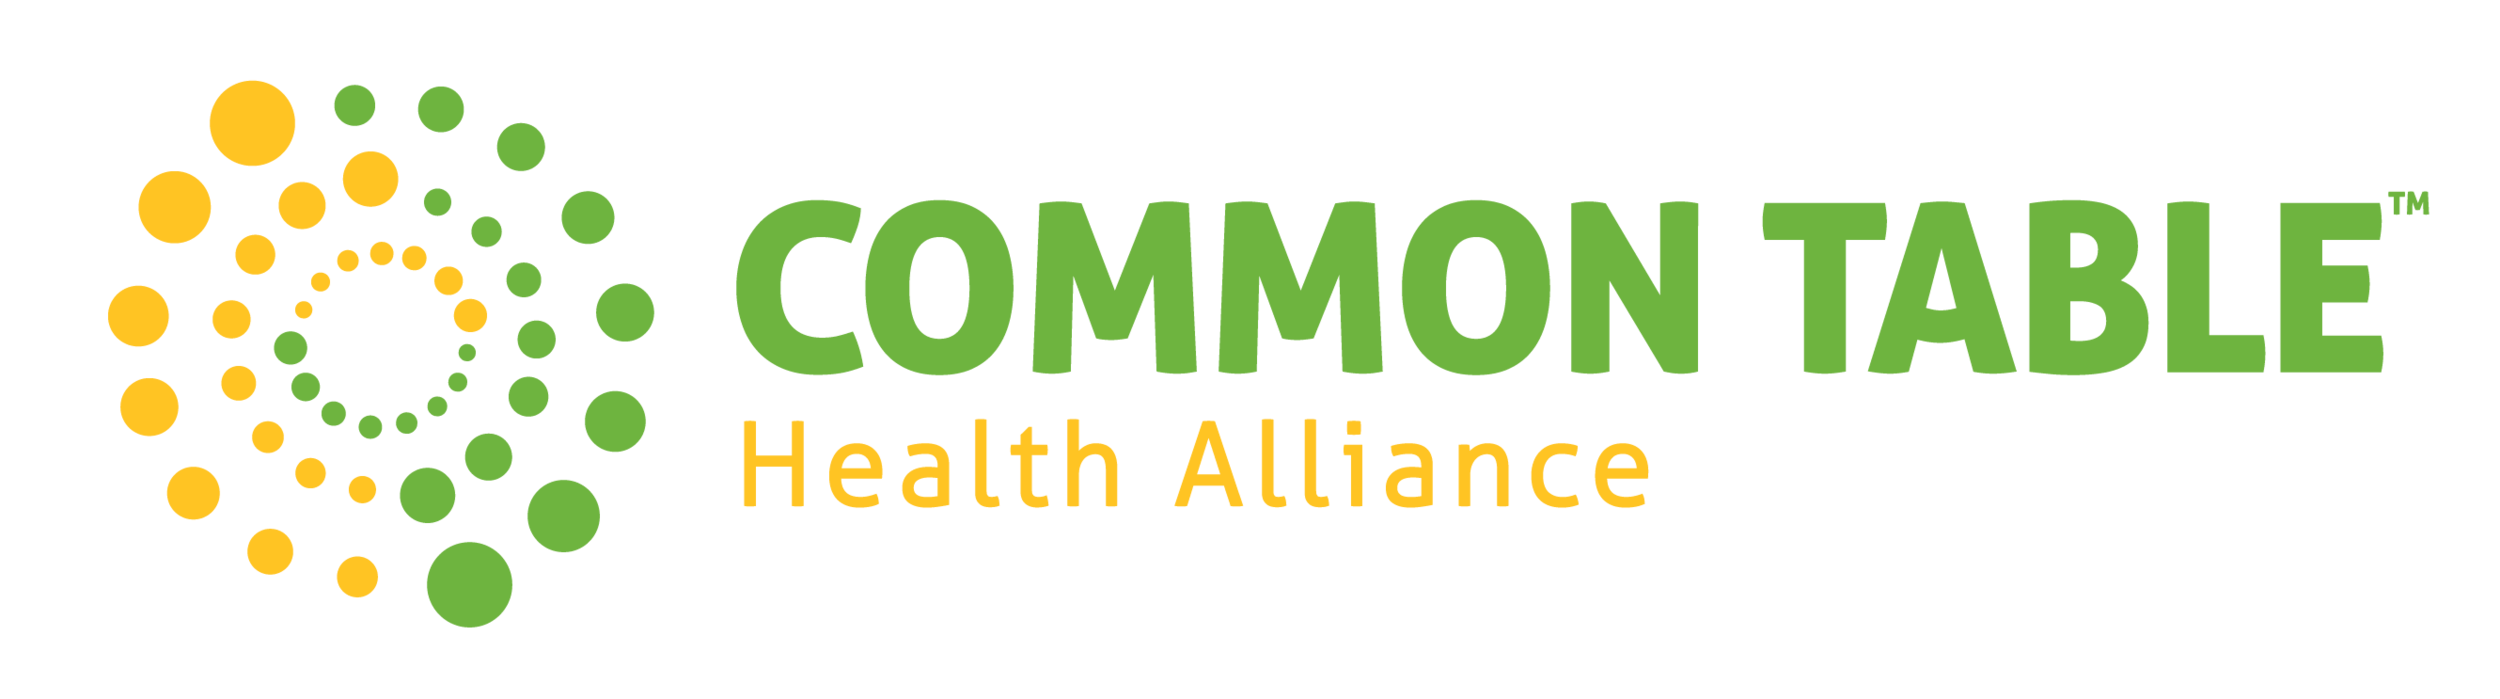 Common Table Health Alliance